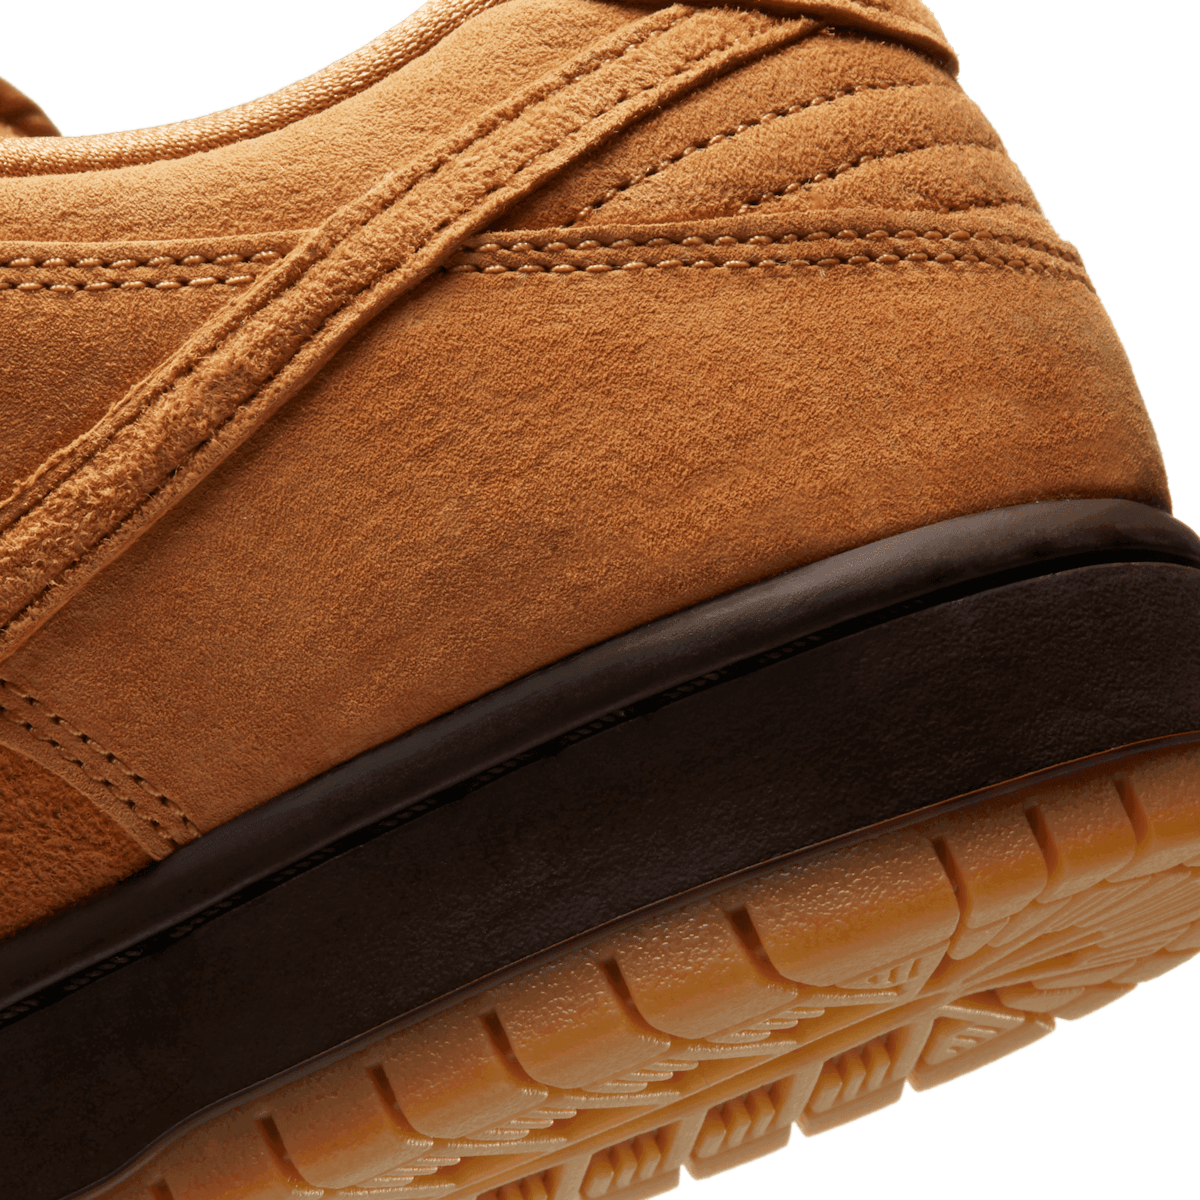 Nike SB Dunk Low Wheat - BQ6817-204 Raffles and Release Date